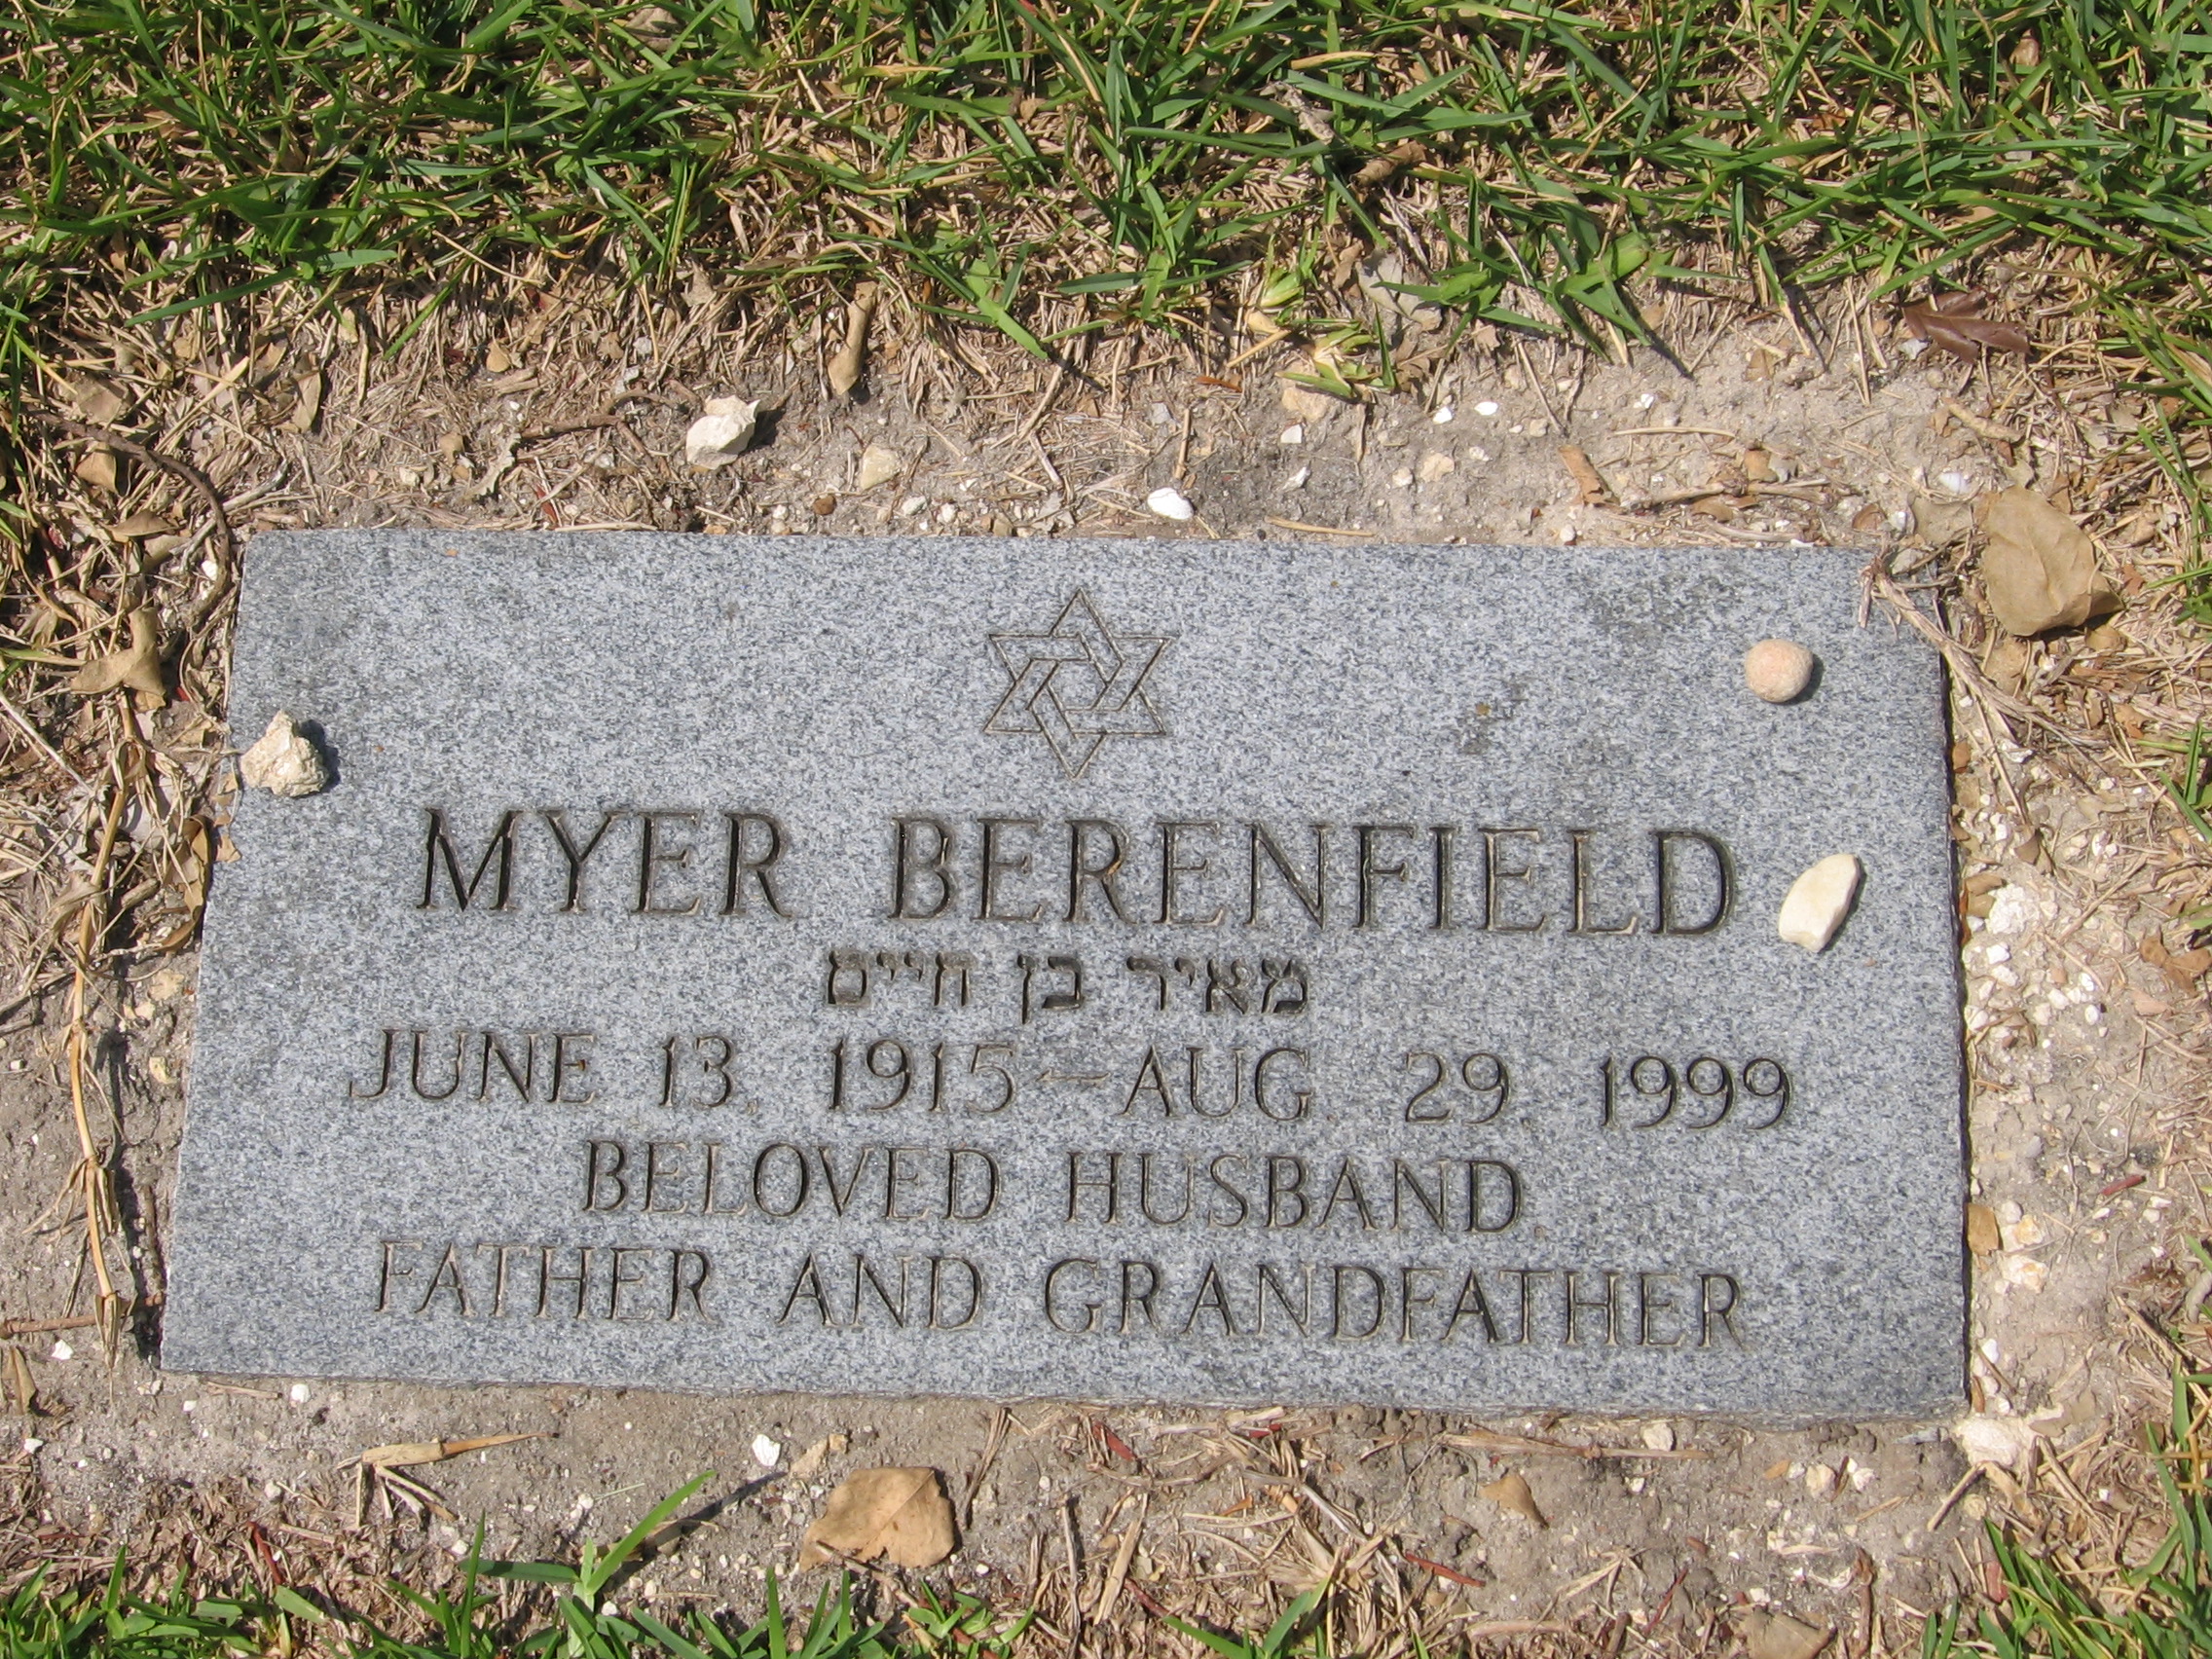 Myer Berenfield